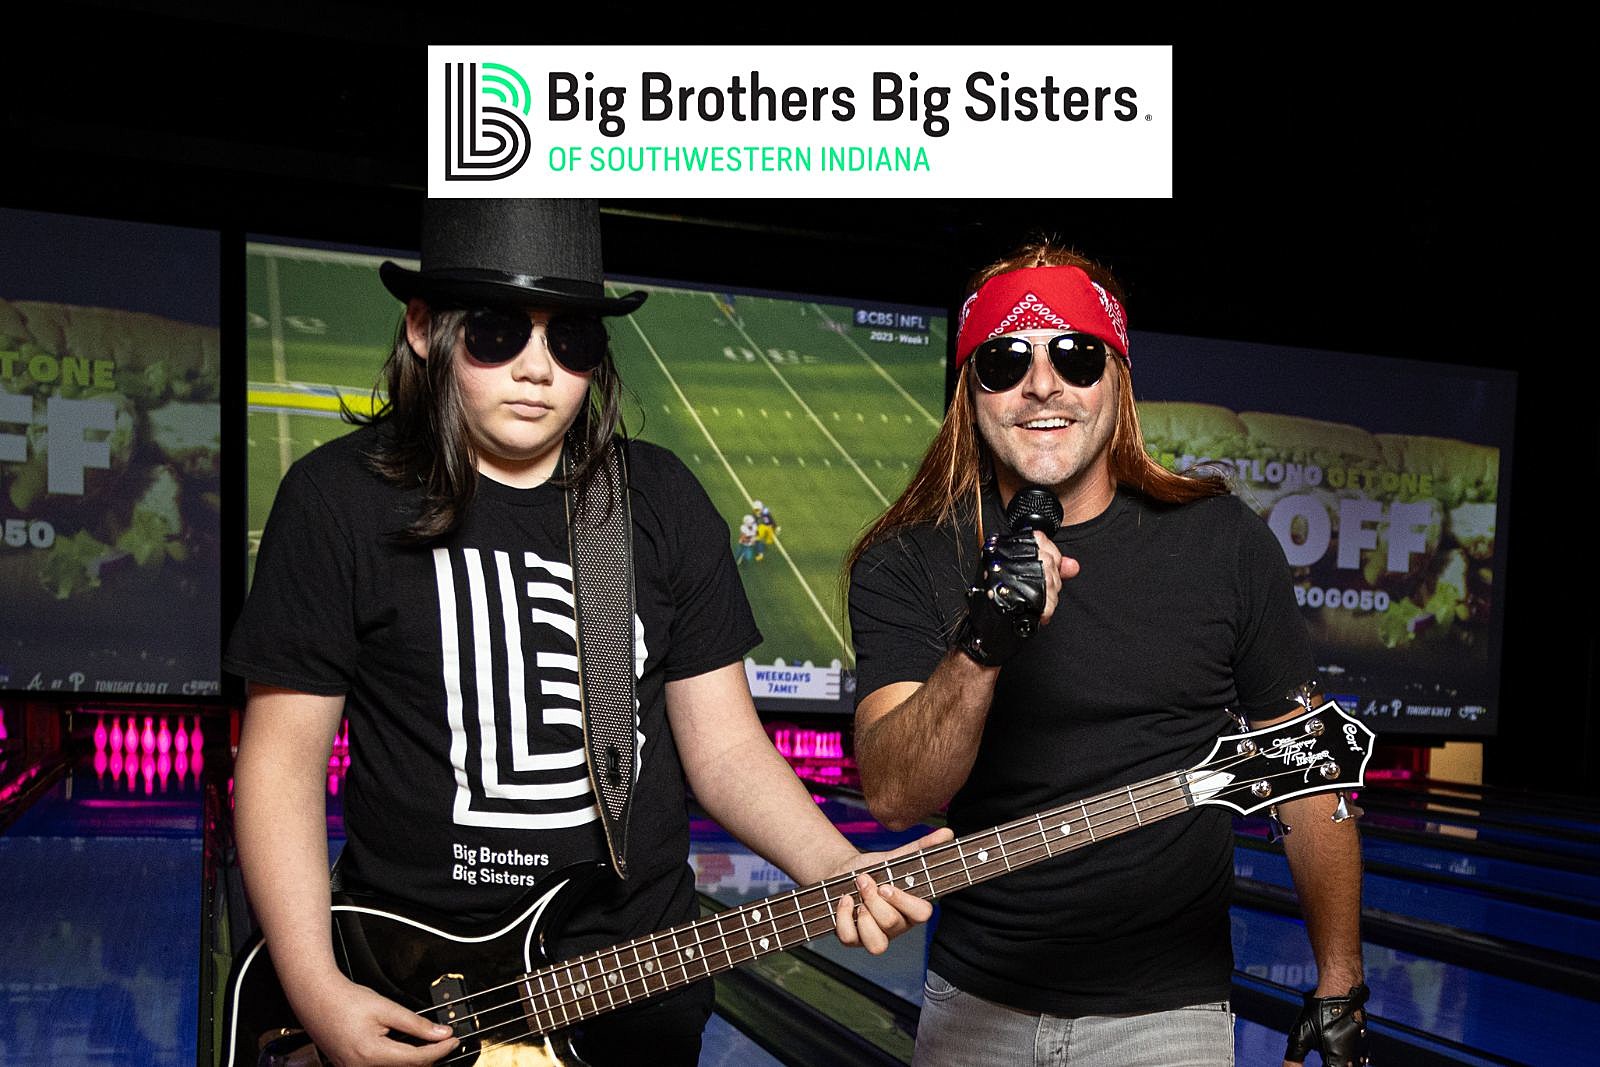 Tommy Bahama raises $100,000 for Big Brothers Big Sisters